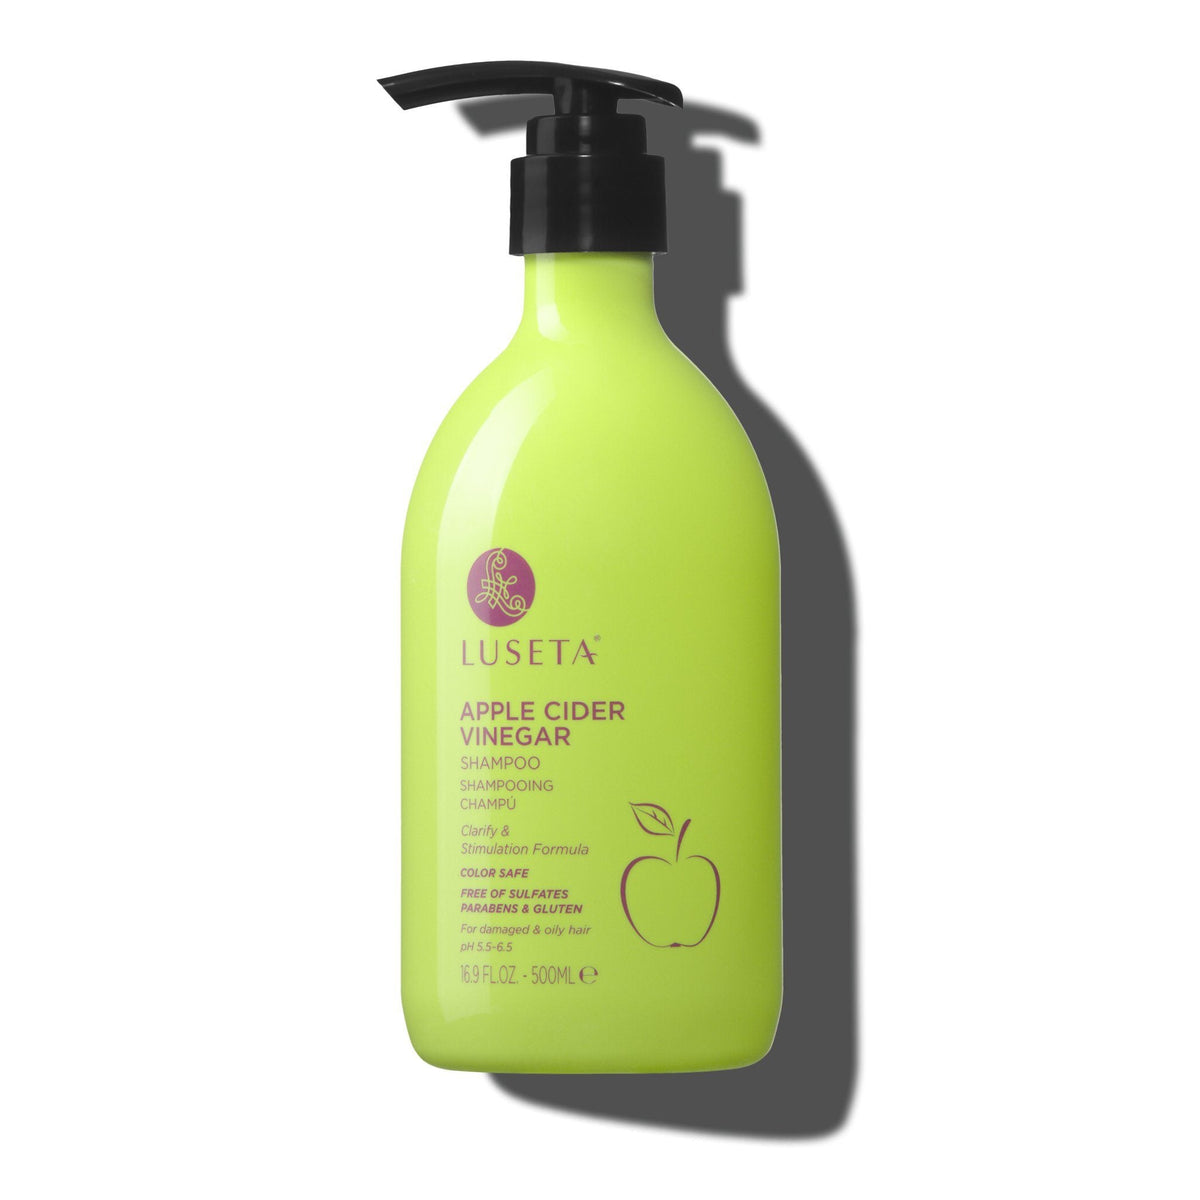 Apple Cider Vinegar Shampoo - 16.9oz - by Luseta Beauty |ProCare Outlet|